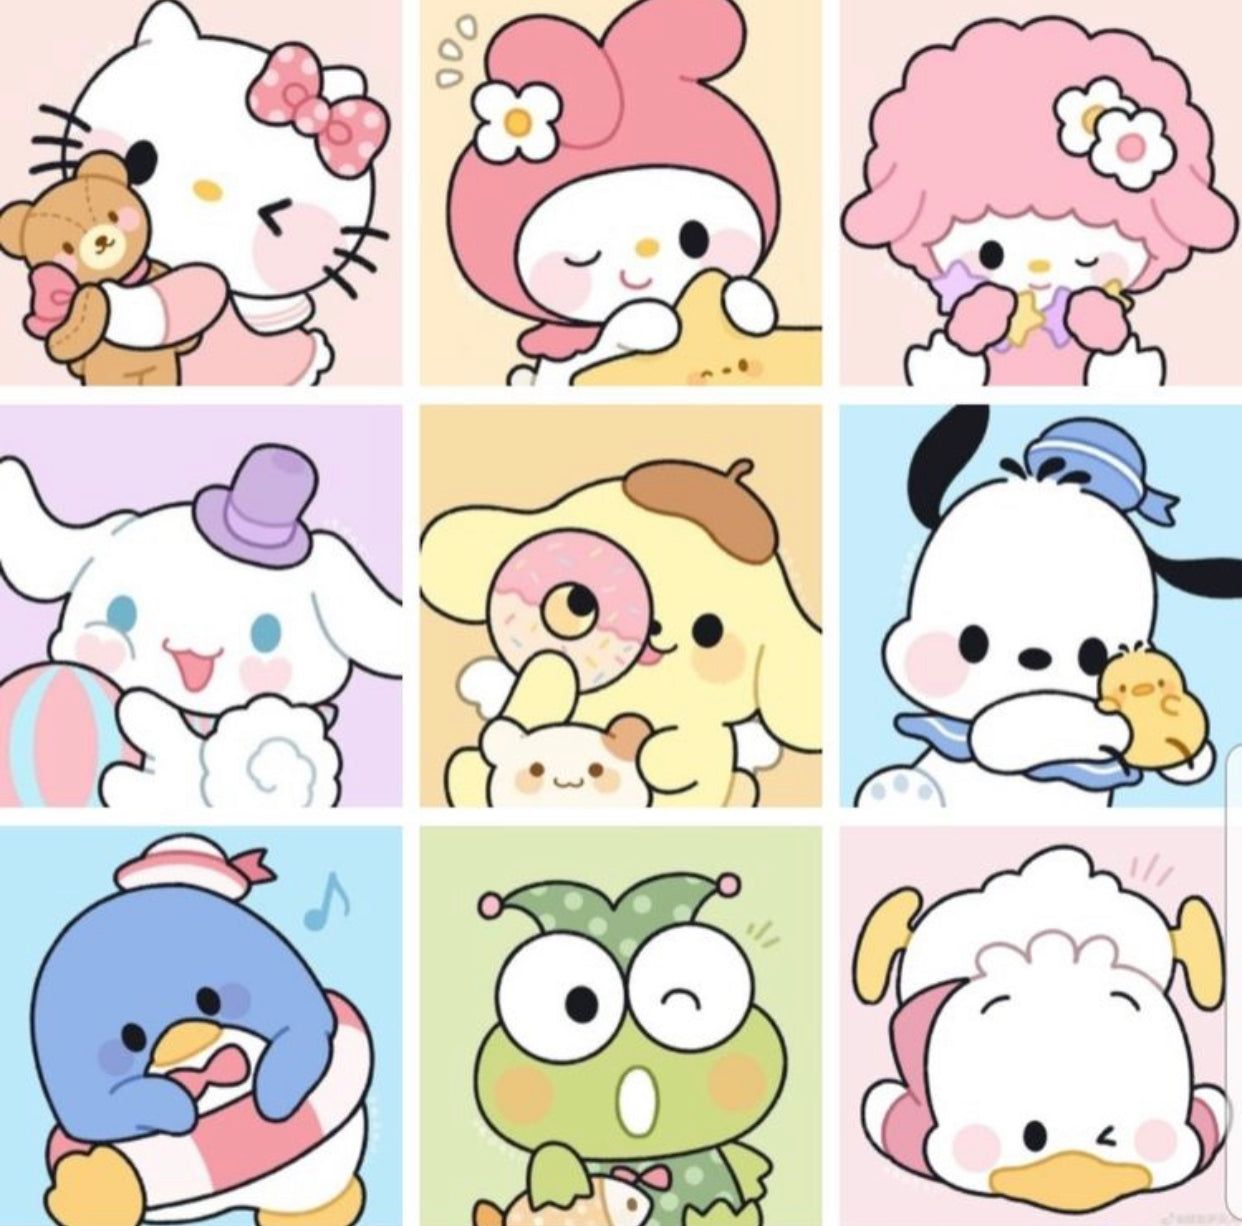 Random Fun Kawaii Sanrio Stickers, Hello Kitty and Friends - 50 Random Stickers